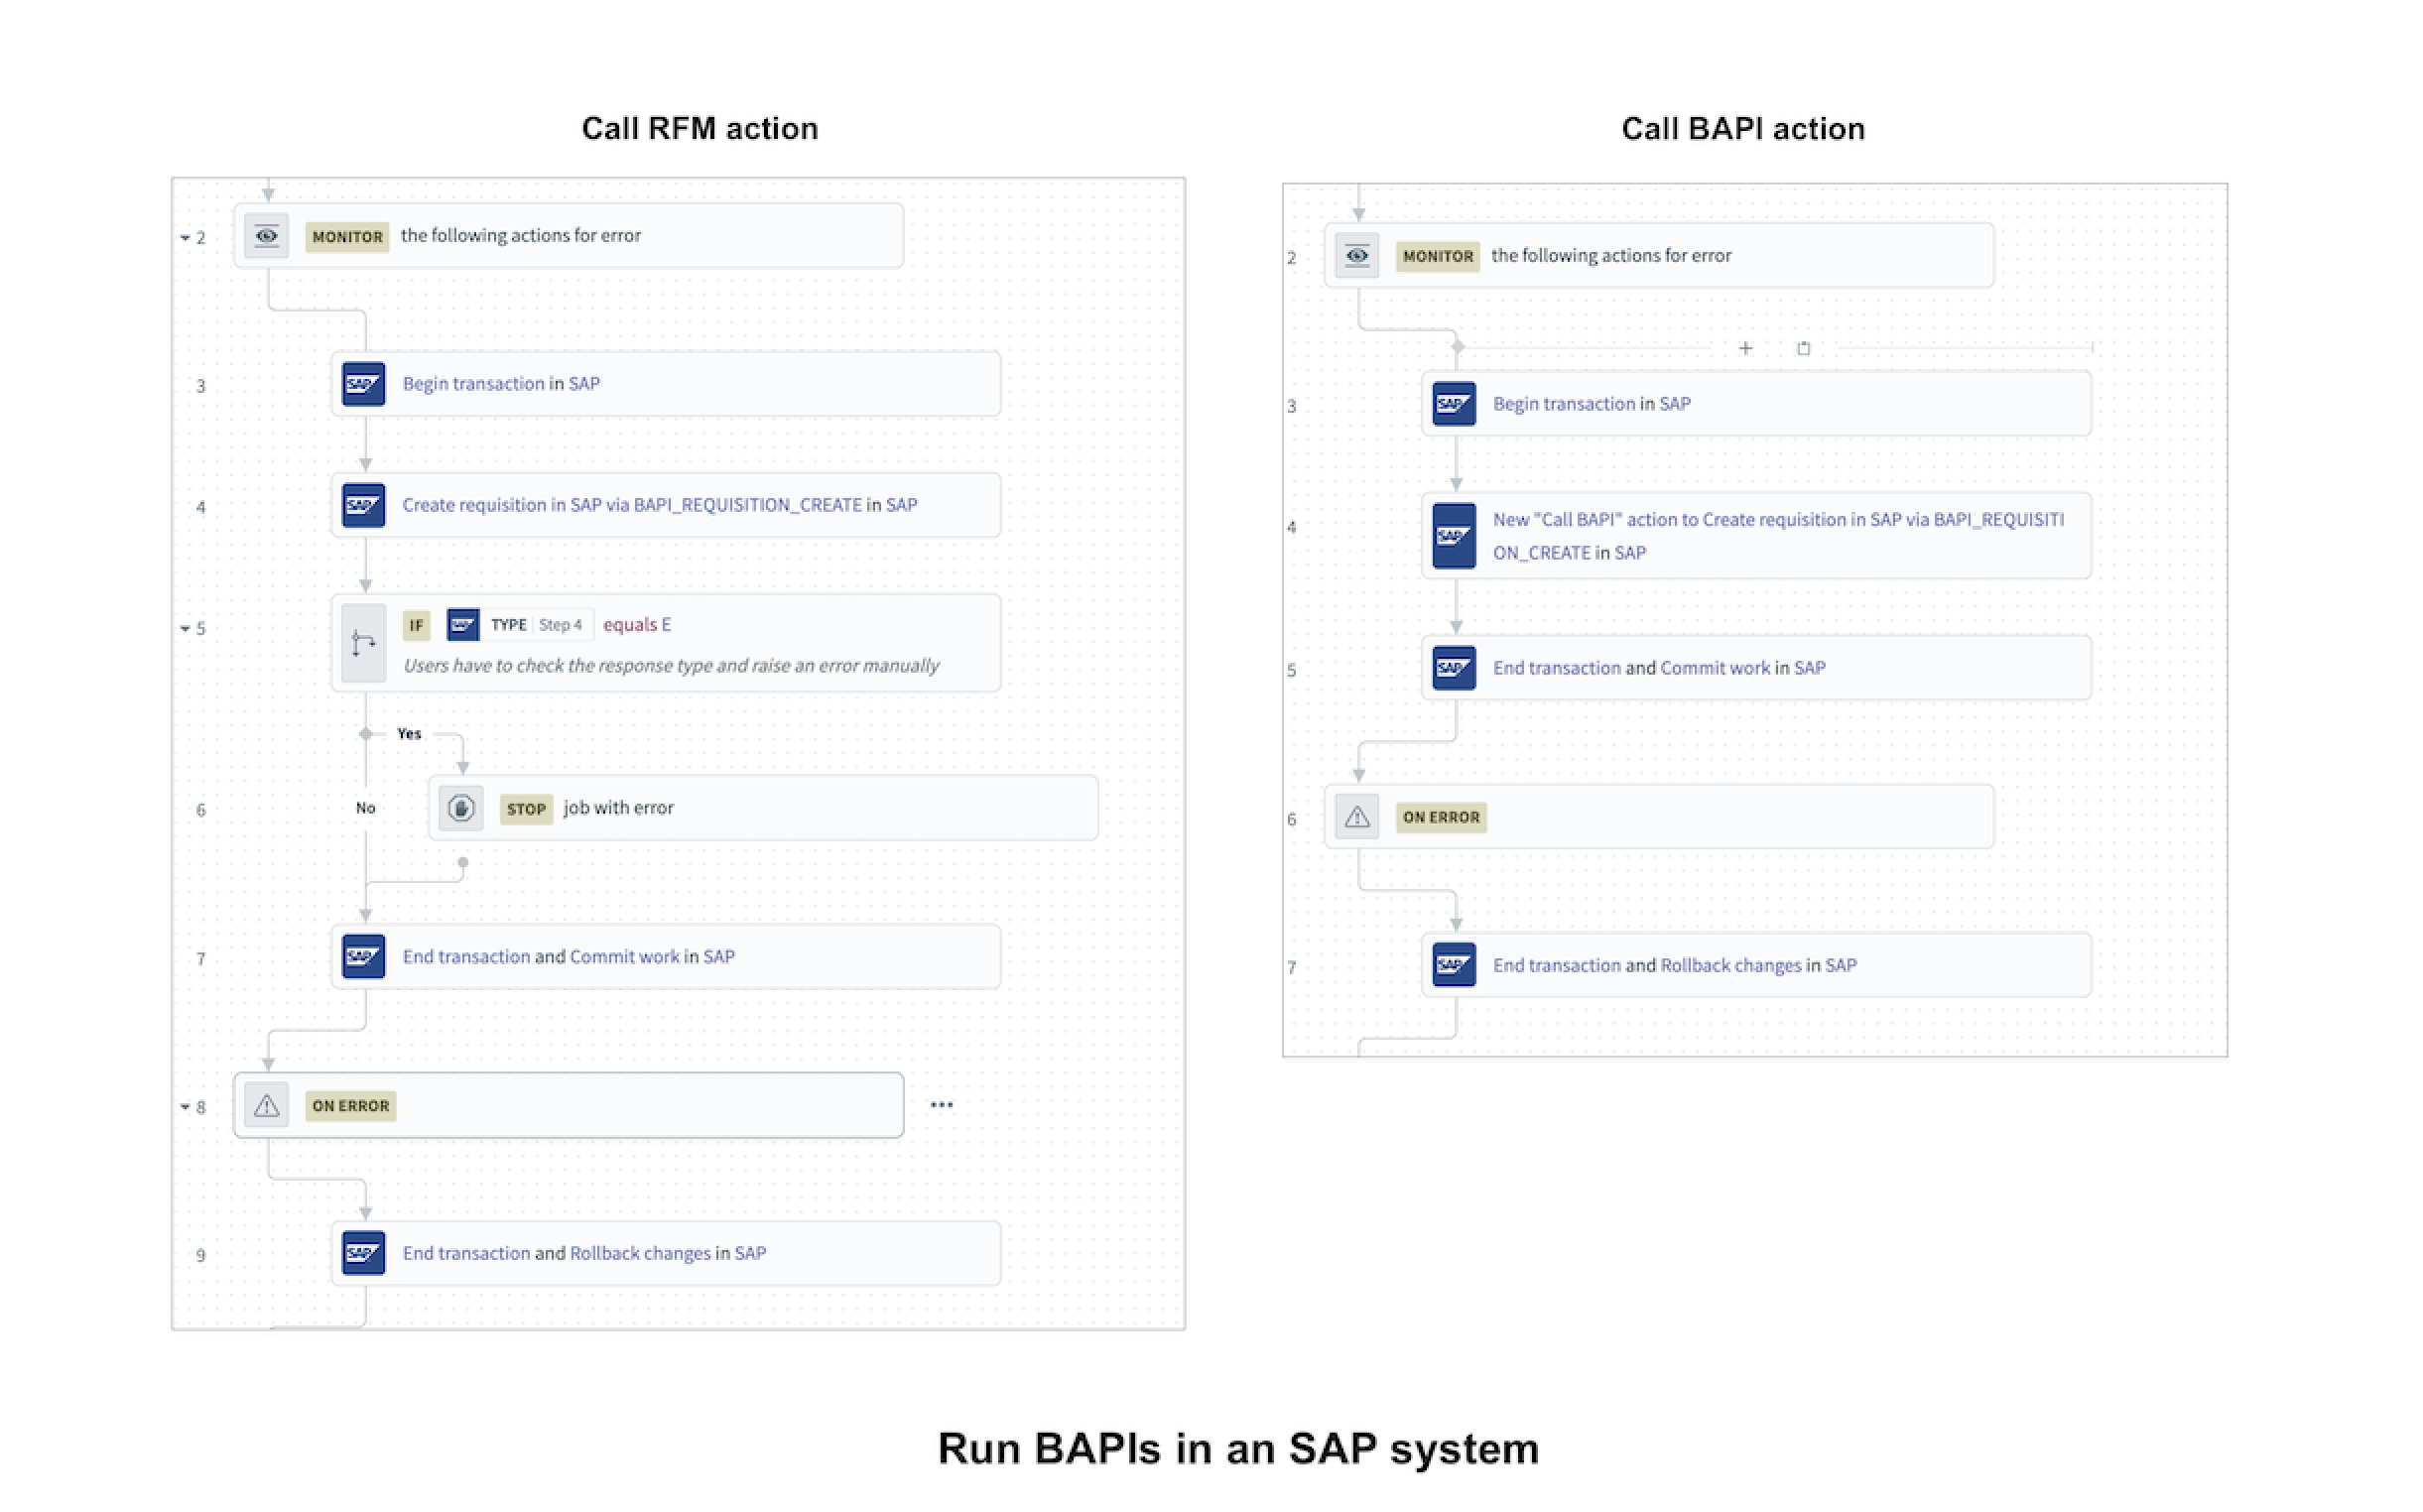 Call BAPI/RFM action comparison